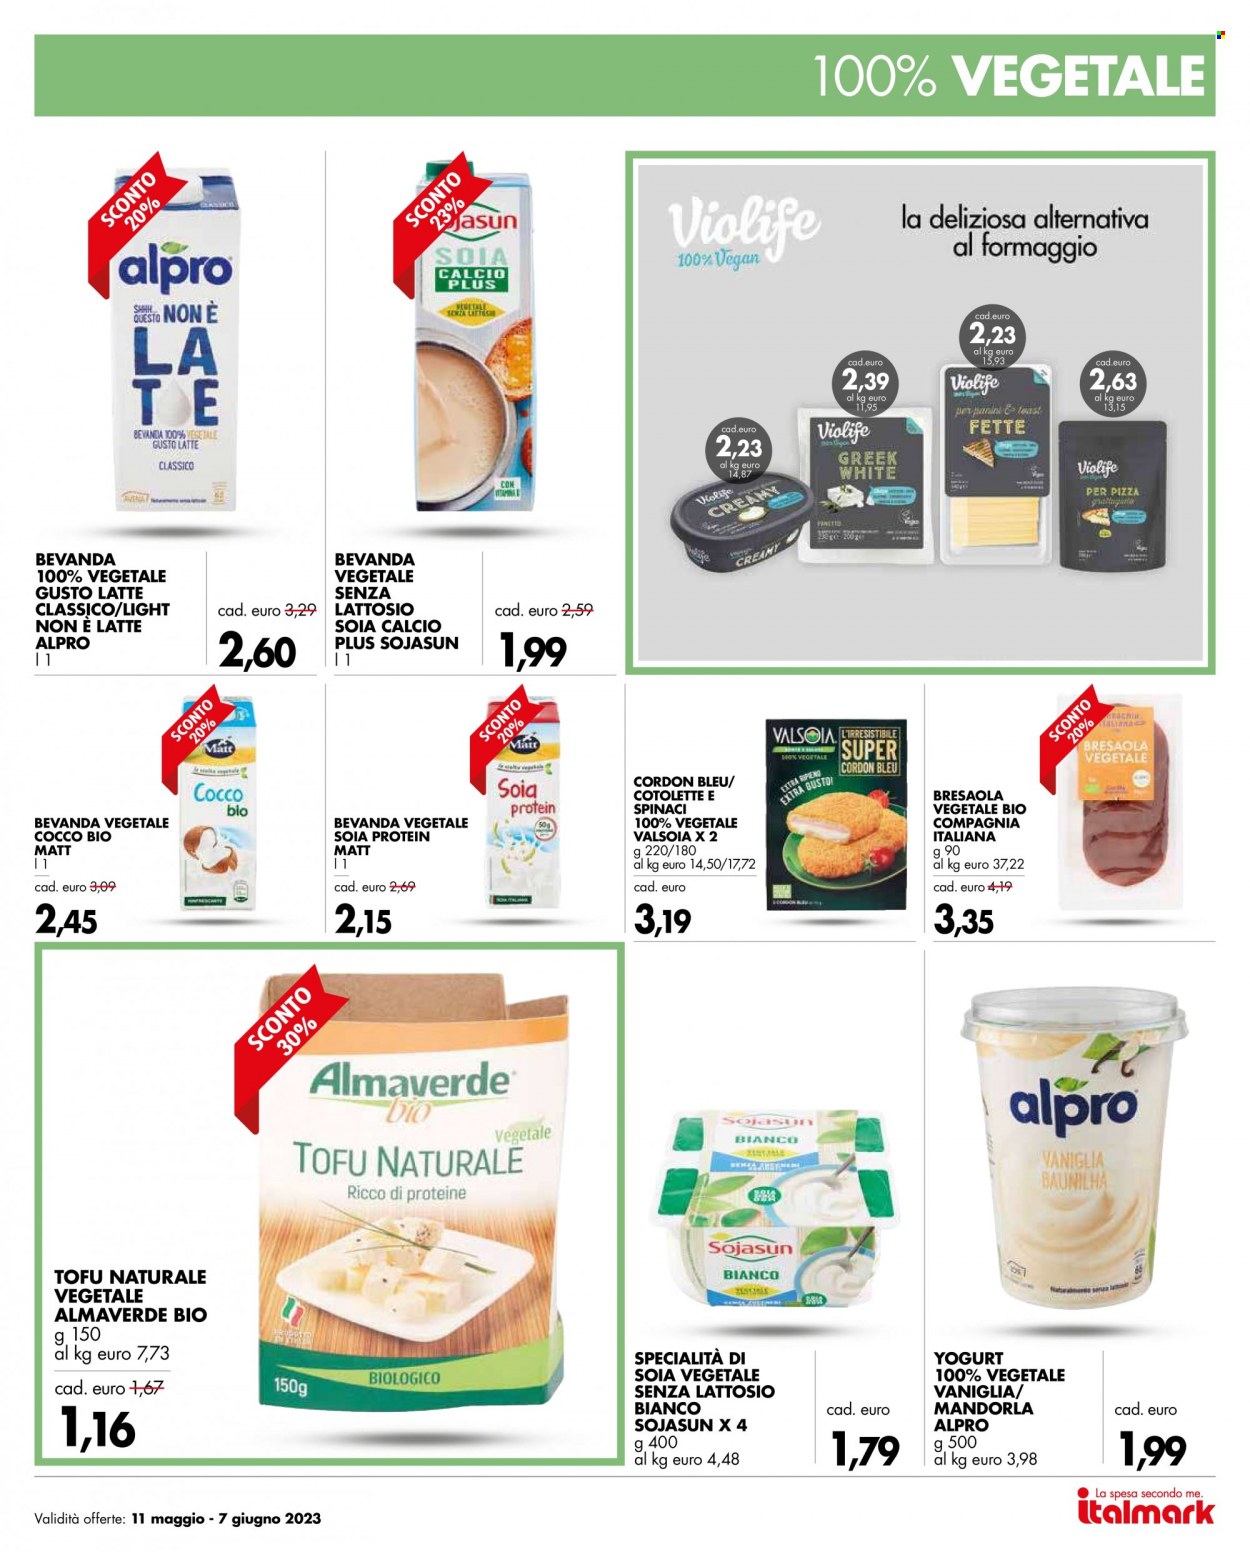 thumbnail - Volantino Italmark - 11/5/2023 - 7/6/2023 - Prodotti in offerta - cotolette, Valsoia, tofu, Cordon Bleu, bresaola, yogurt, Alpro, soia. Pagina 21.